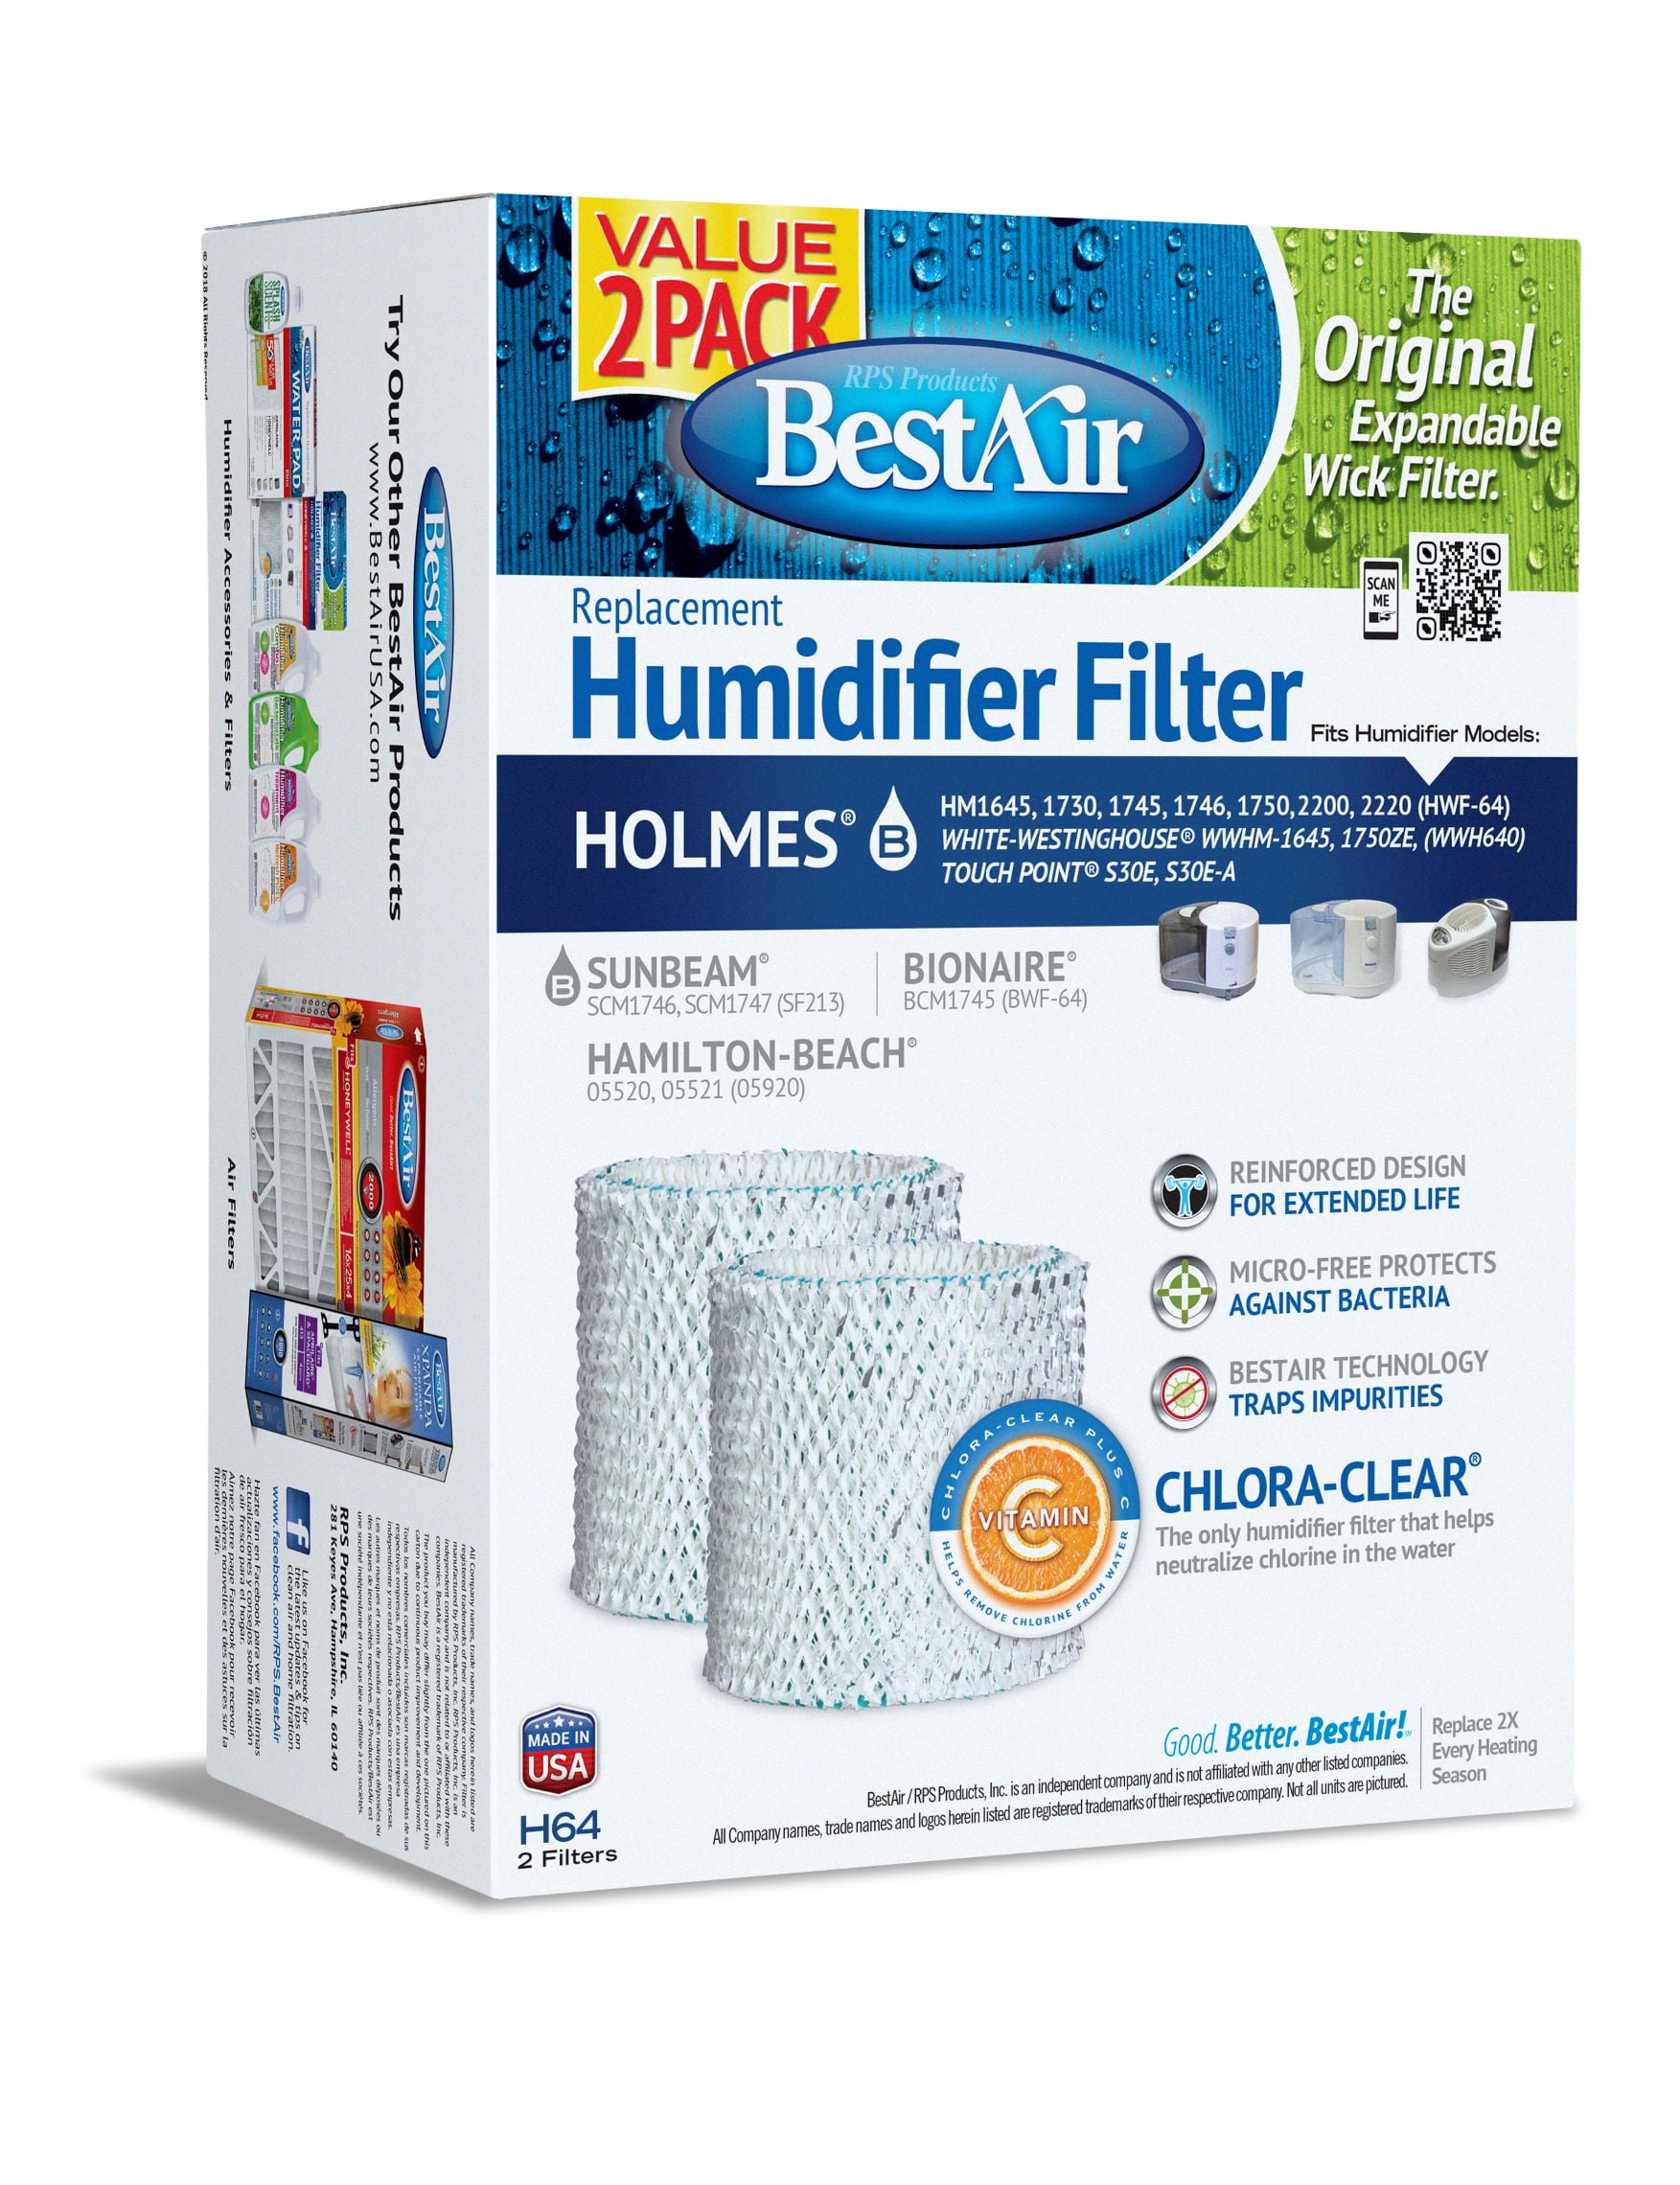 2Pk Humidifier Filter B Fits Holmes Bionaire HWF64 HM1645 2200 SCM1746 Sunbeam 